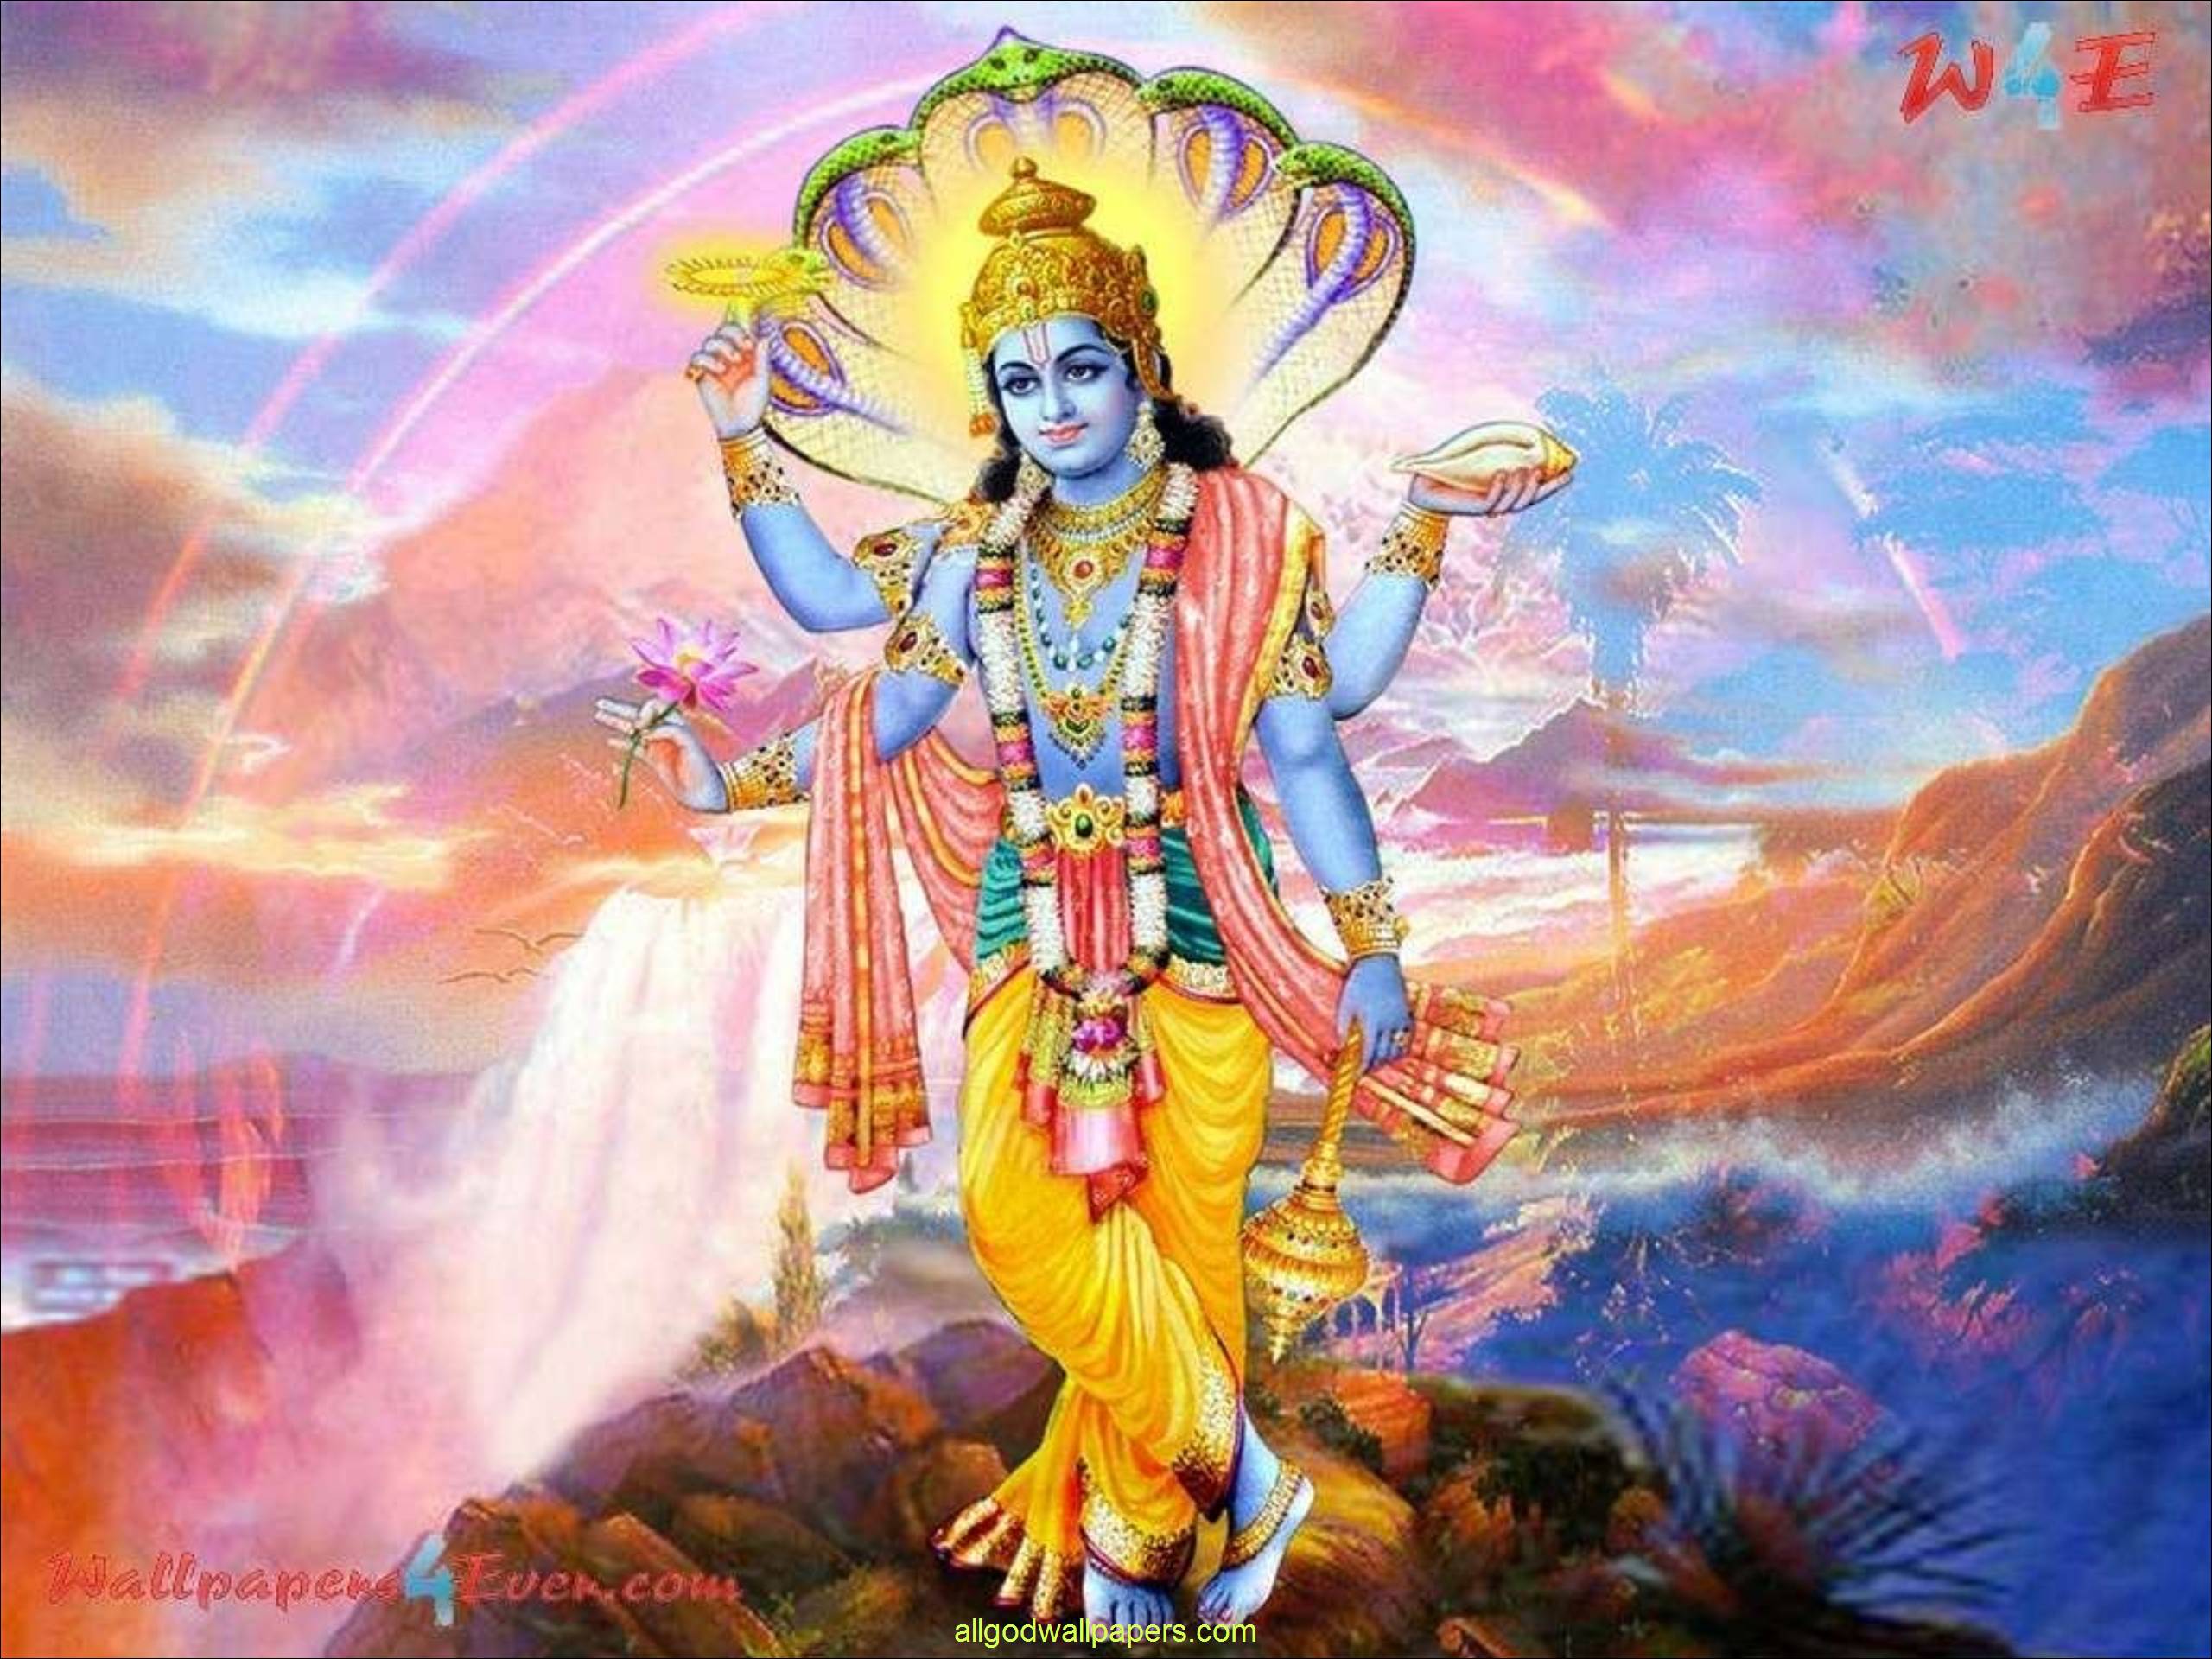 www.allgodwallpapers.com > Wallpapers > Vishnu God Picture